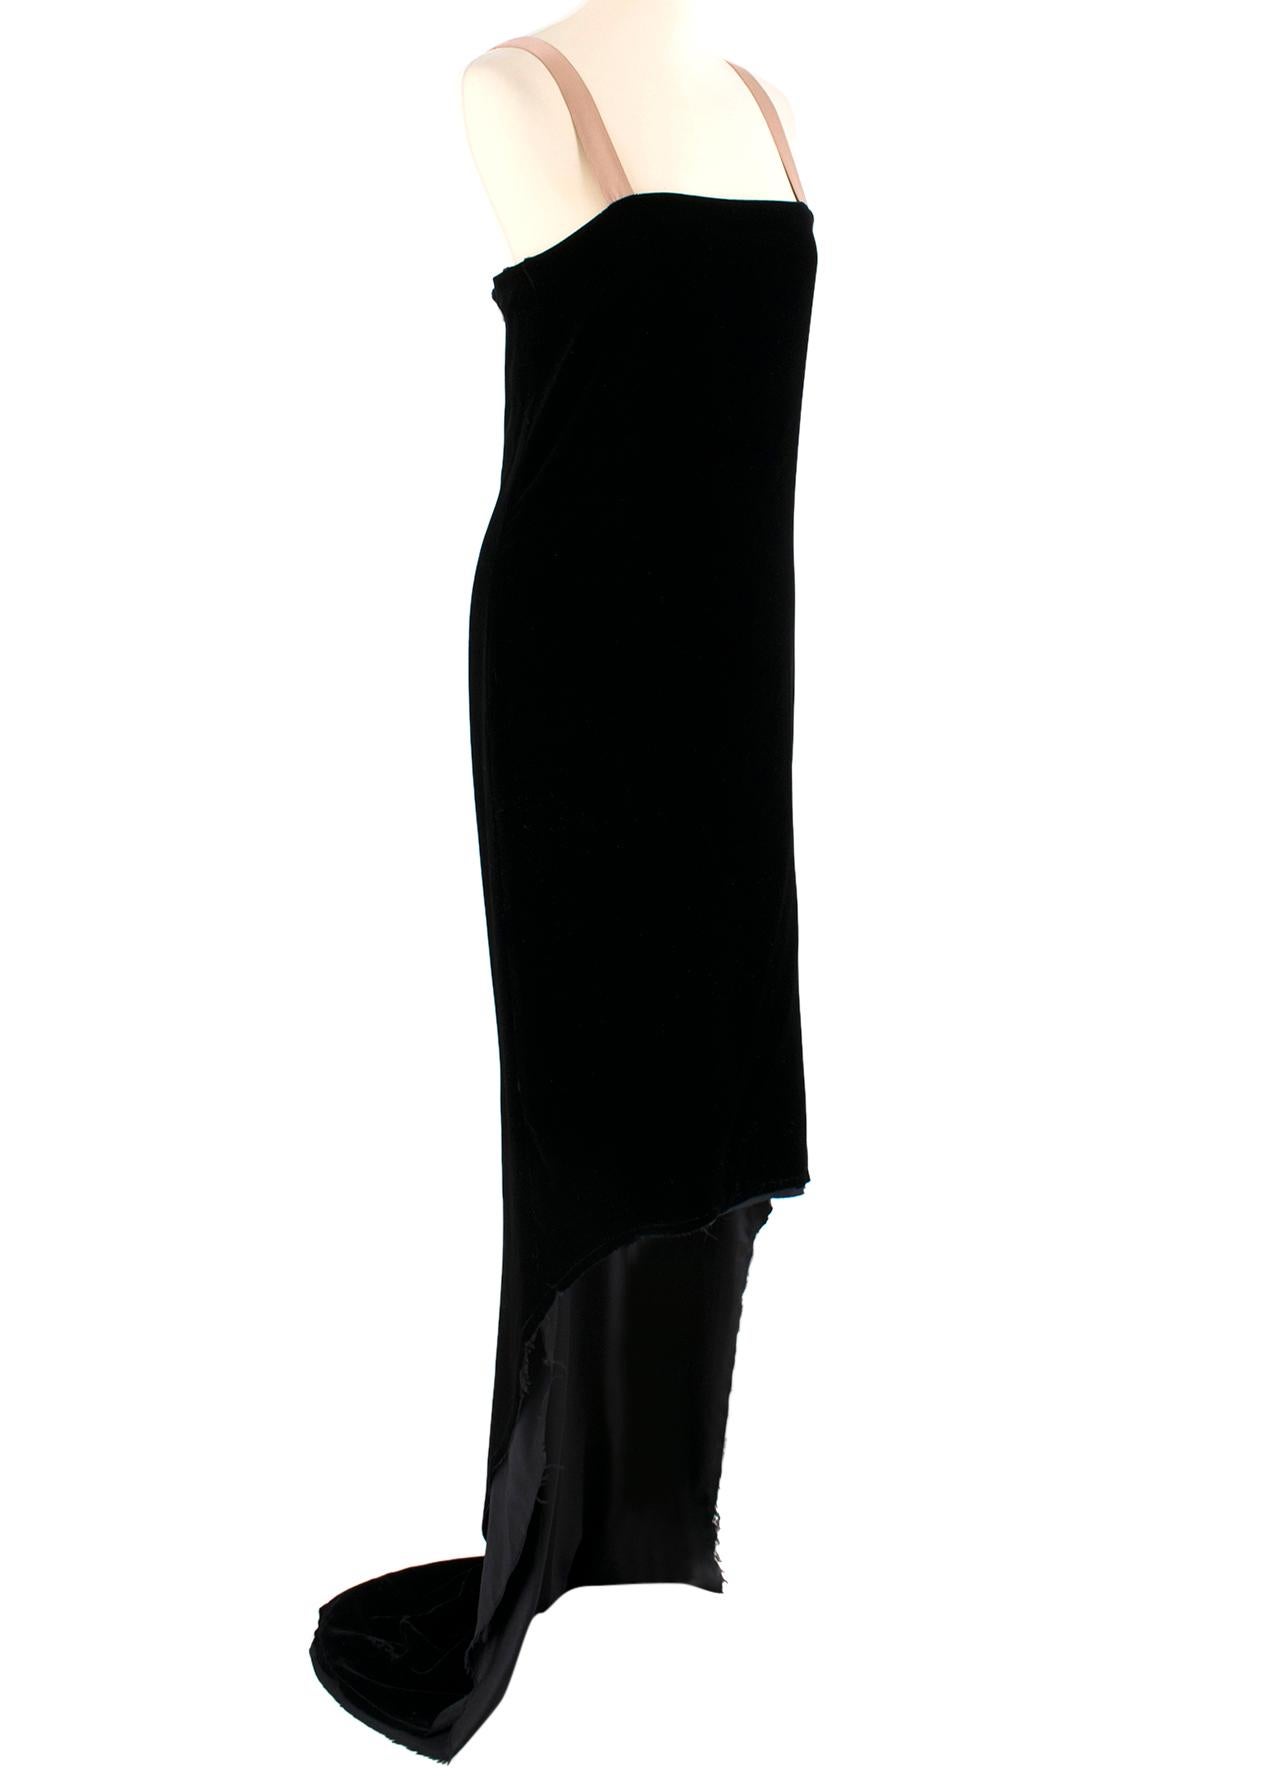 Lanvin by Alber Elbaz Black Velour Asymmetric Dress

- Long black velour dress
- Asymmetric length
- hidden zip fastening to the side
- Silk pink straps
- Raw trim

Approx:

Chest: 39 cm
Length: 87-  160 cm